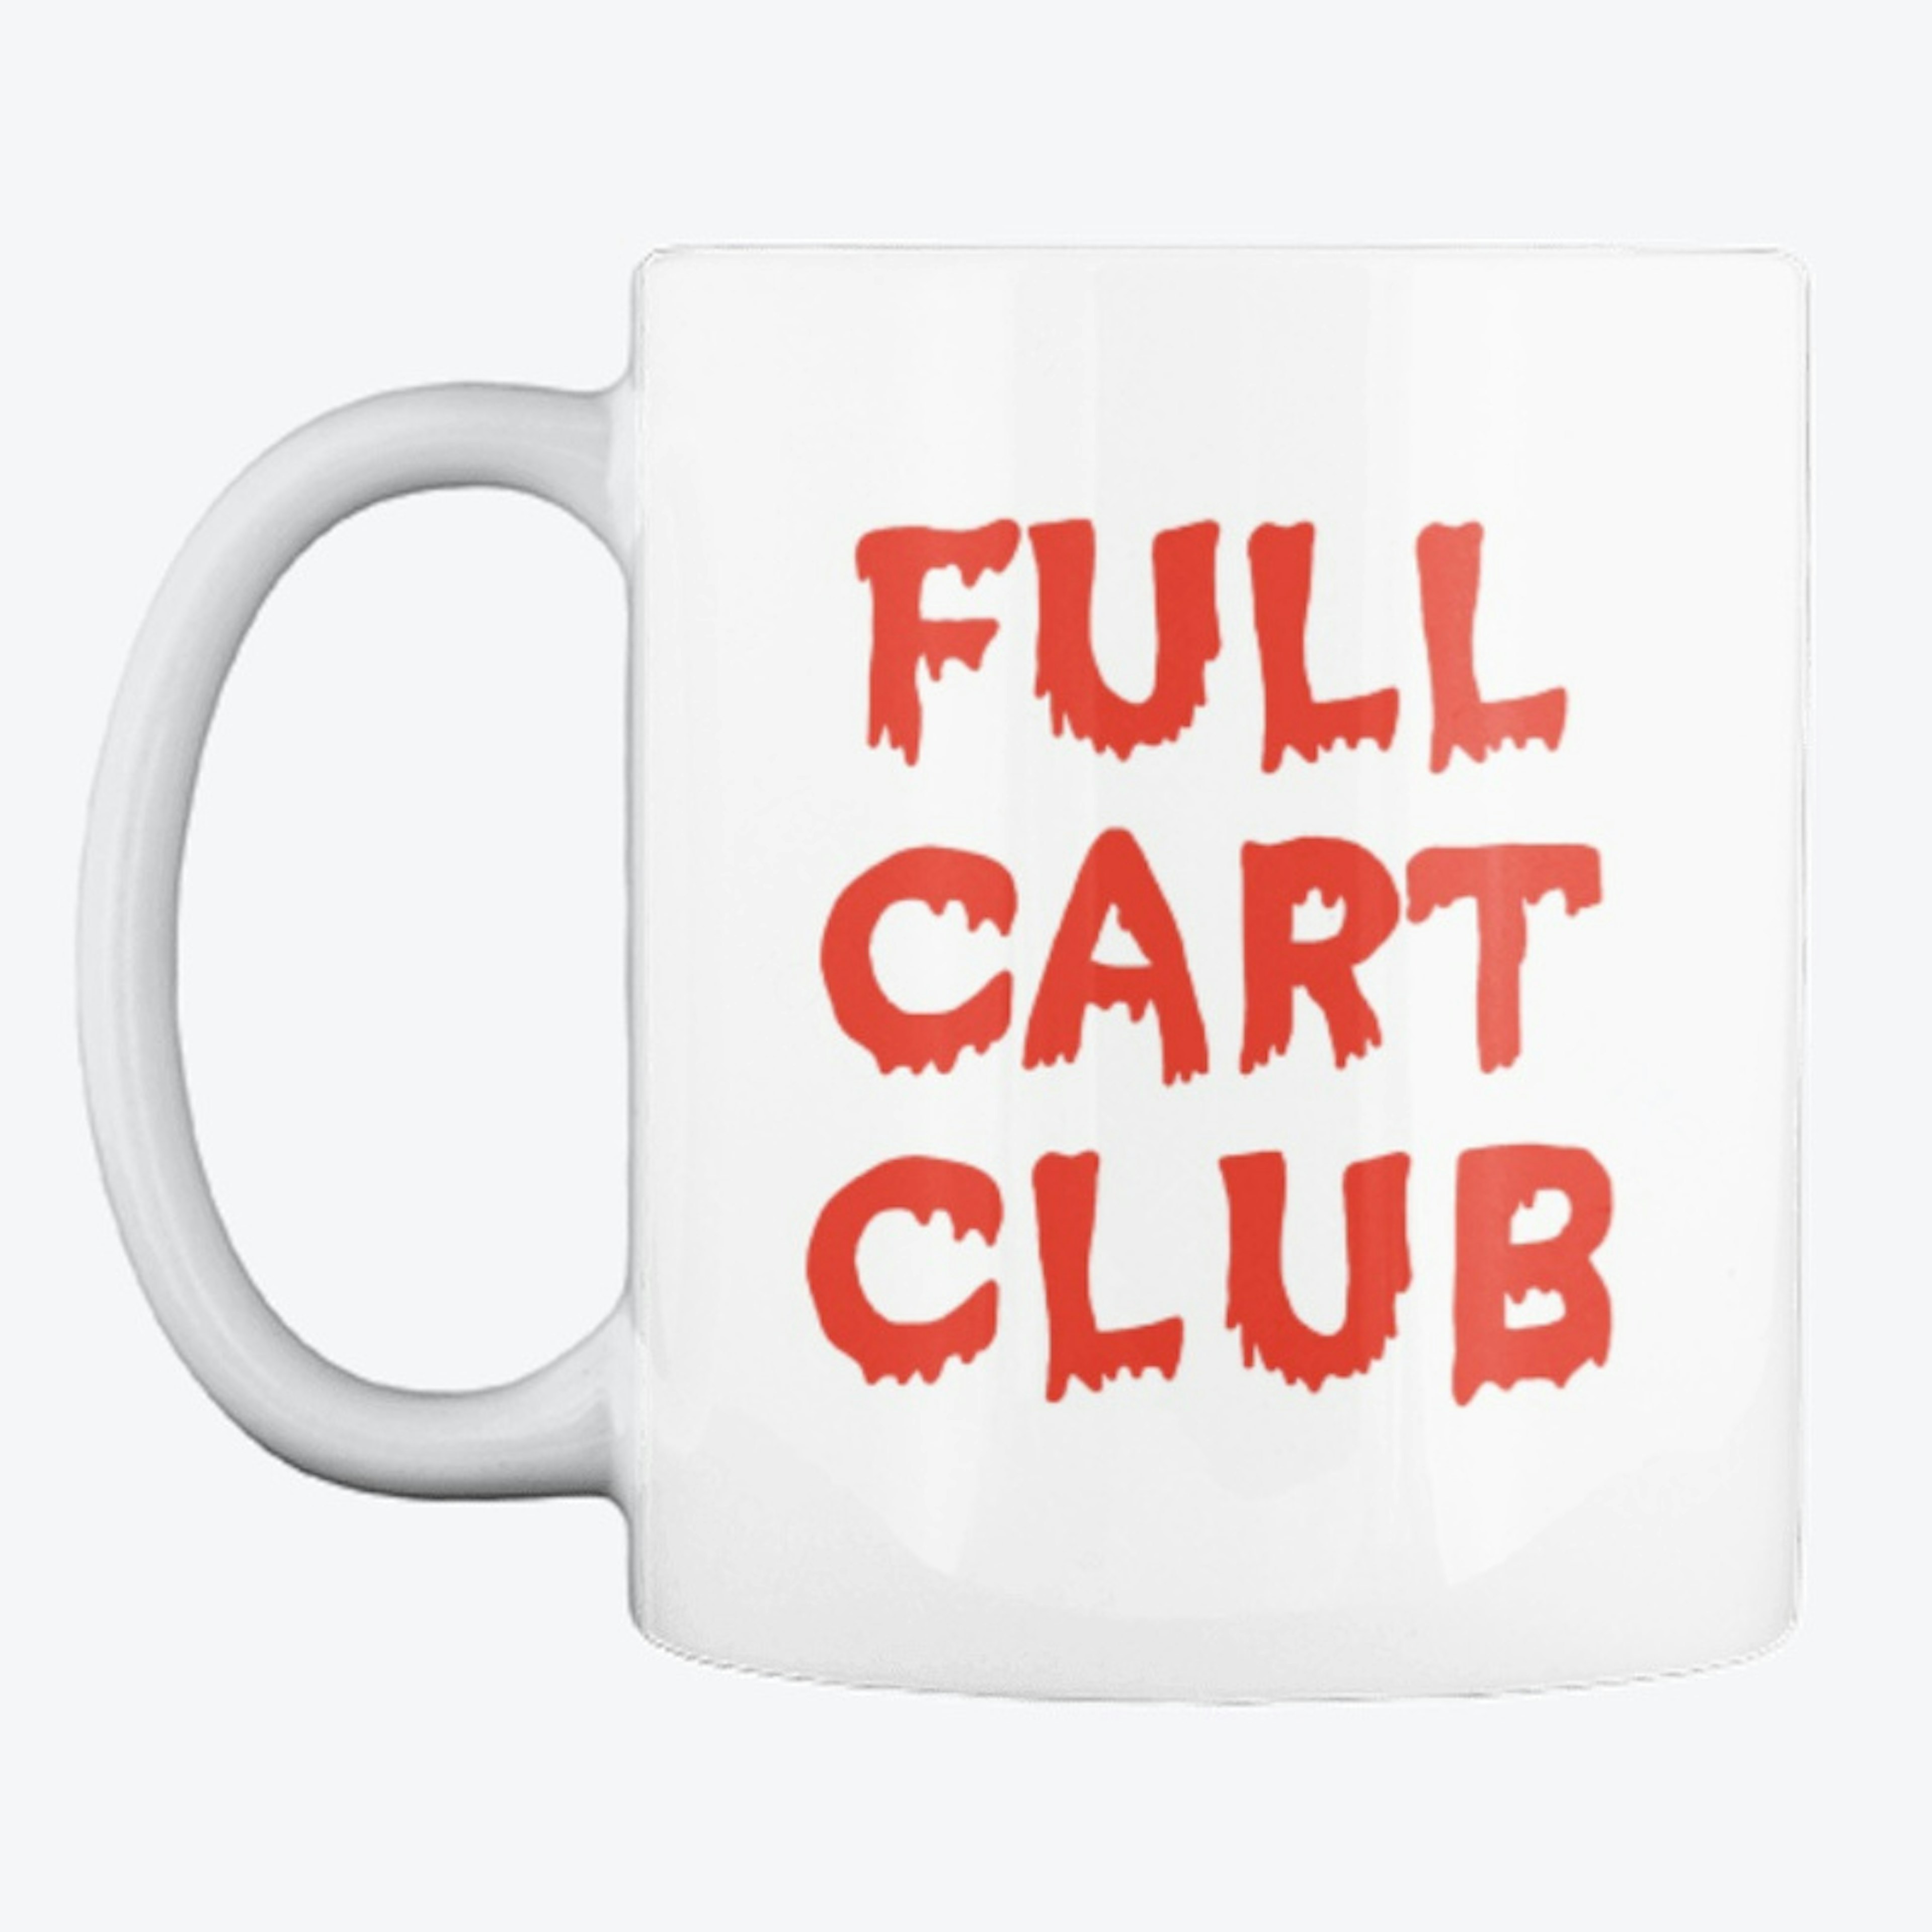 Fall Cart Club